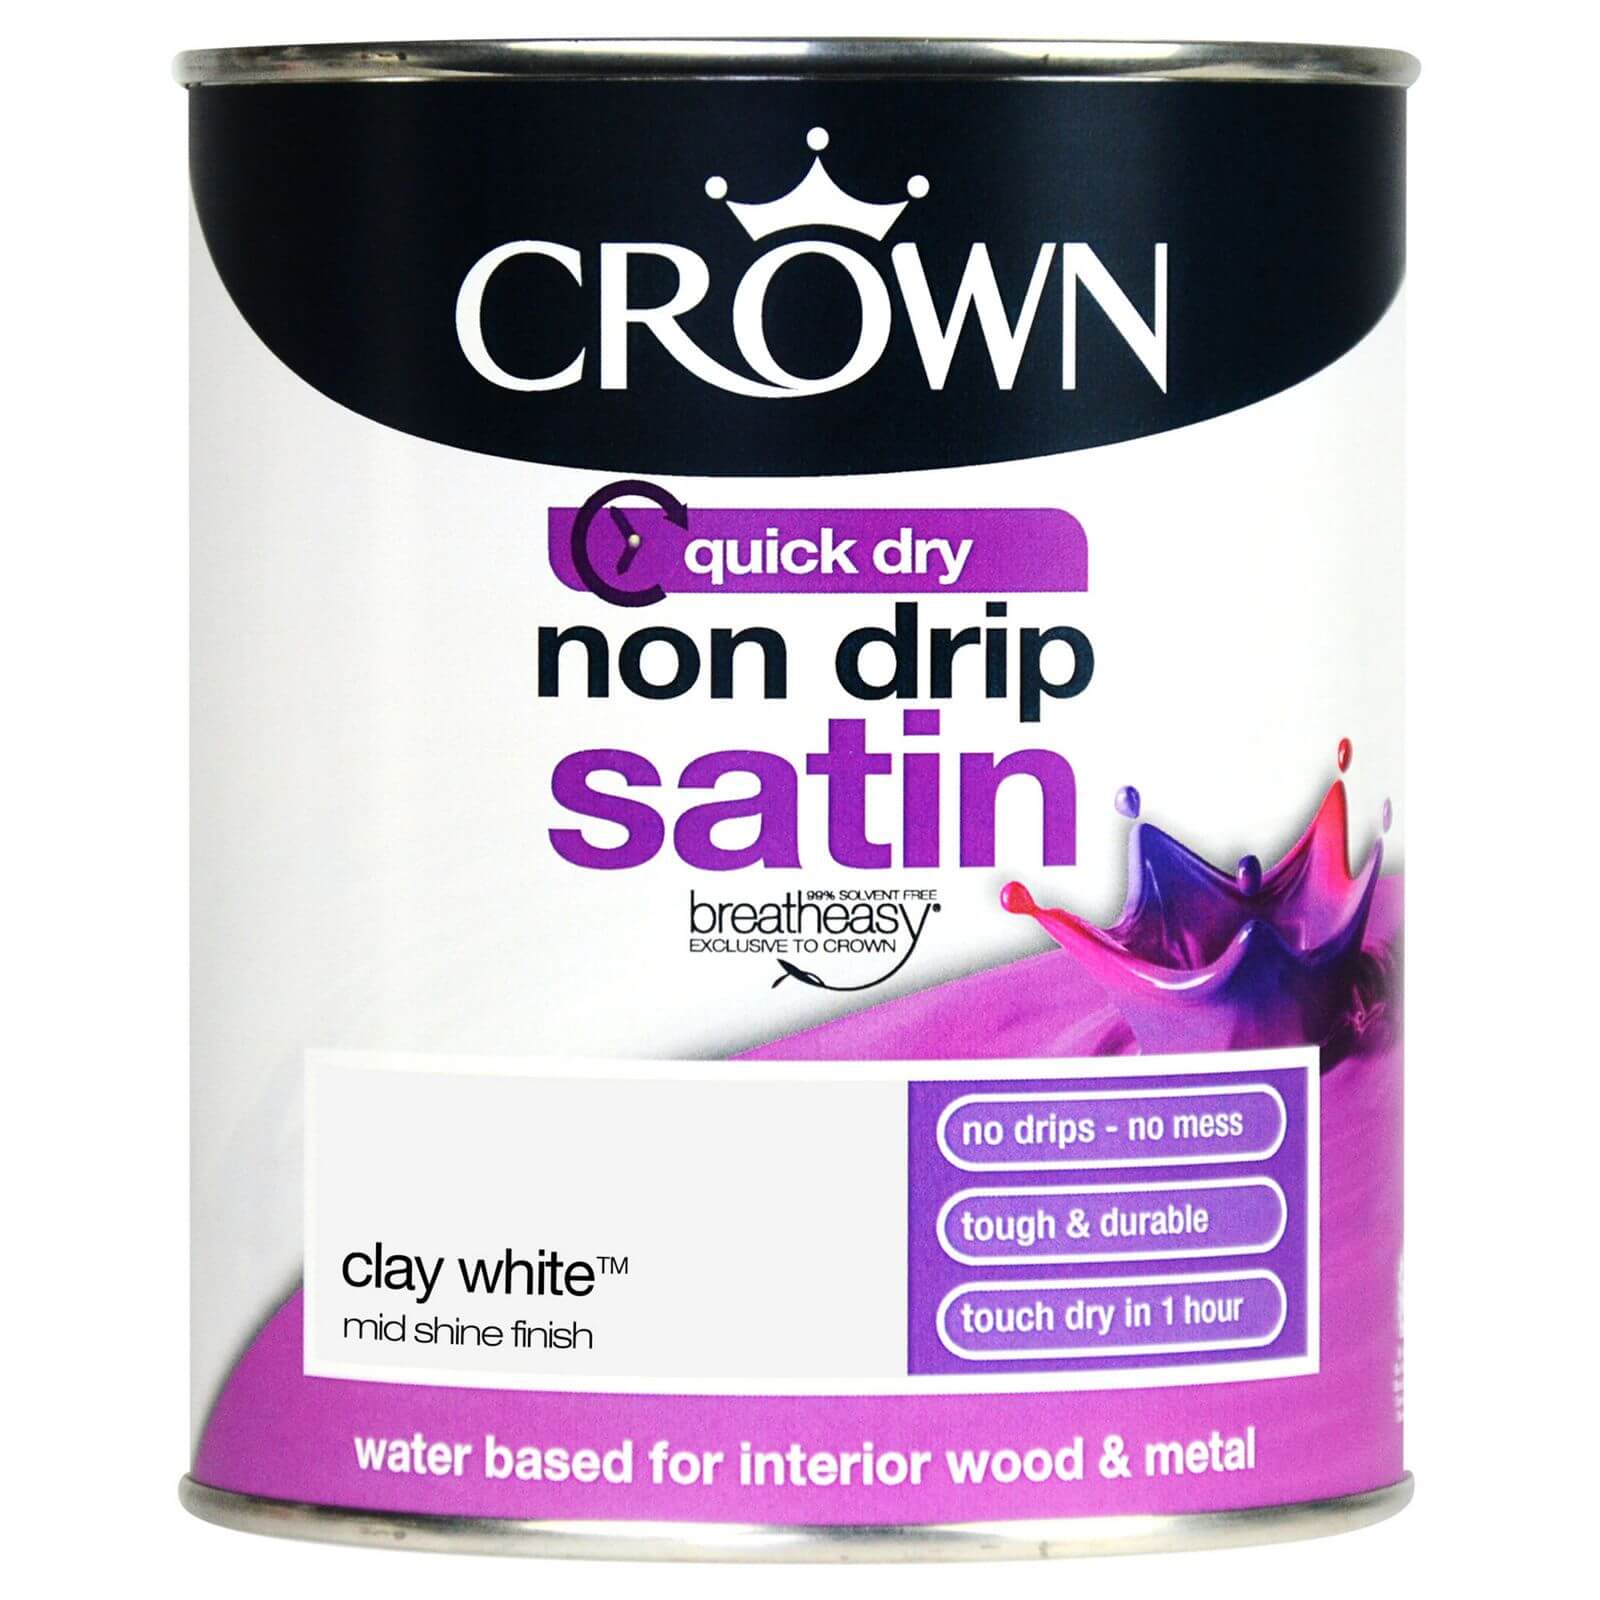 Crown Standard Breatheasy Clay White - Non Drip Satin Paint - 750ml